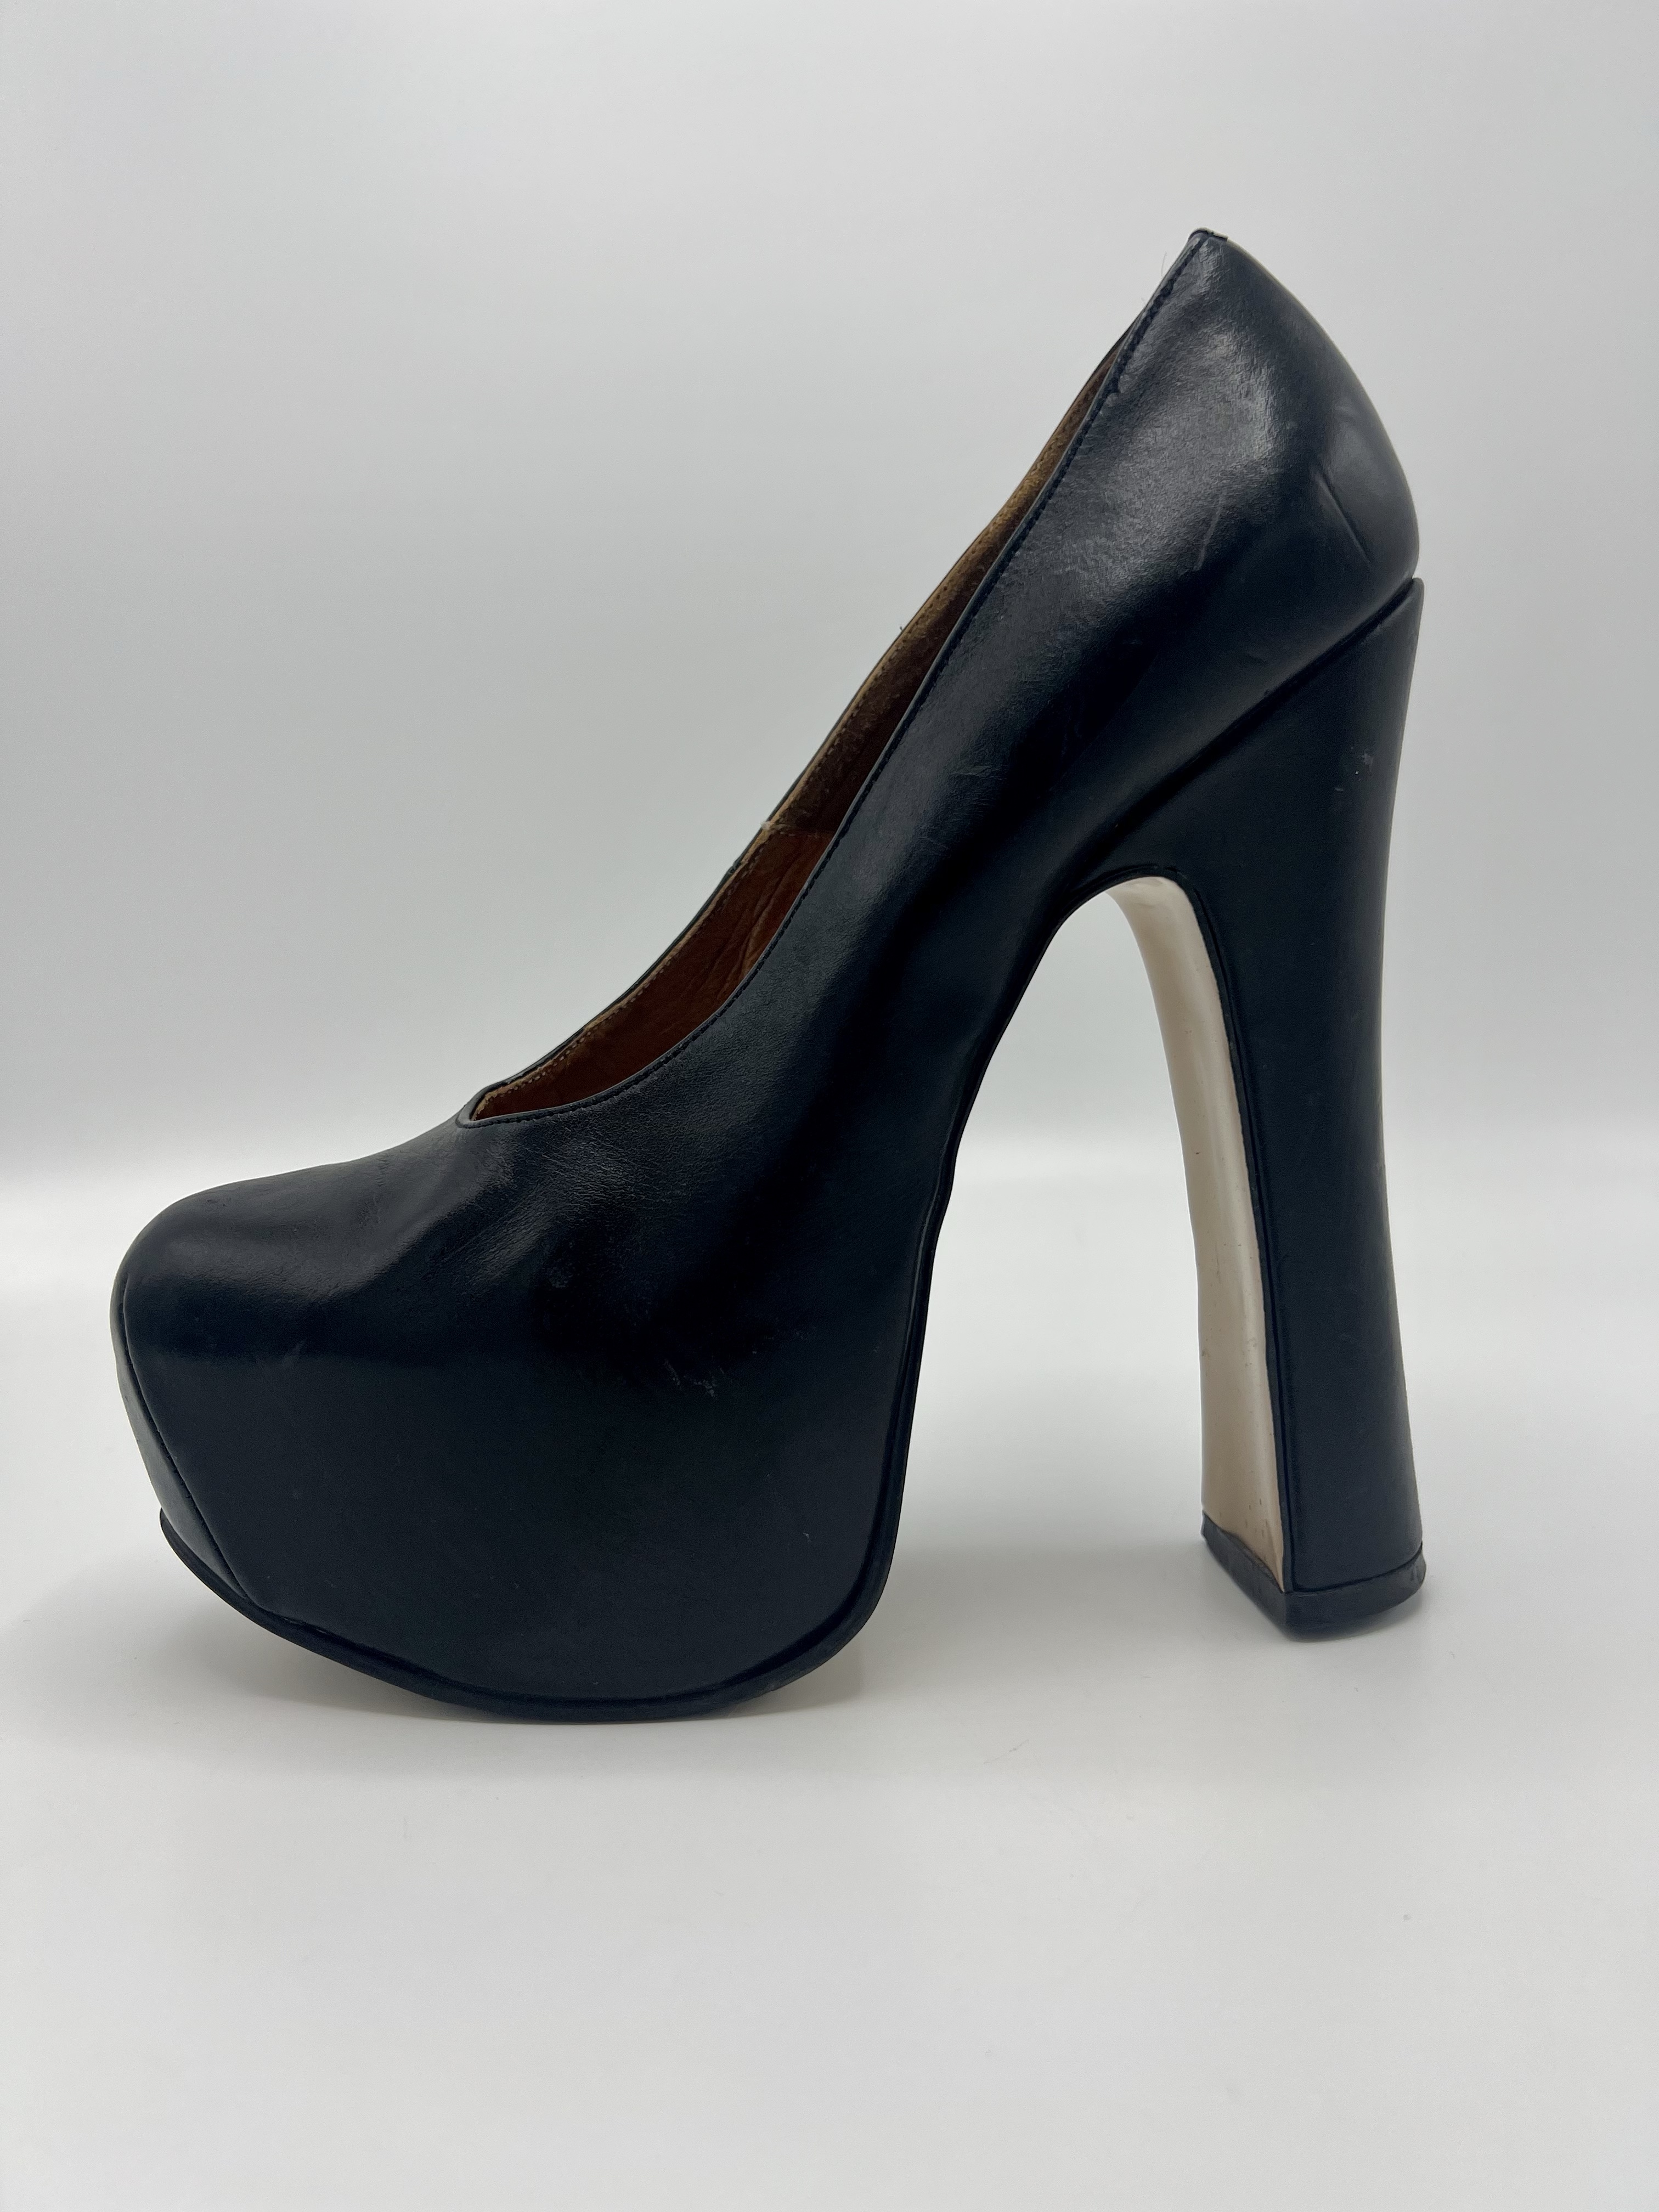 Vivienne Westwood Black Leather Elevated Platform Shoes 90's - Rellik